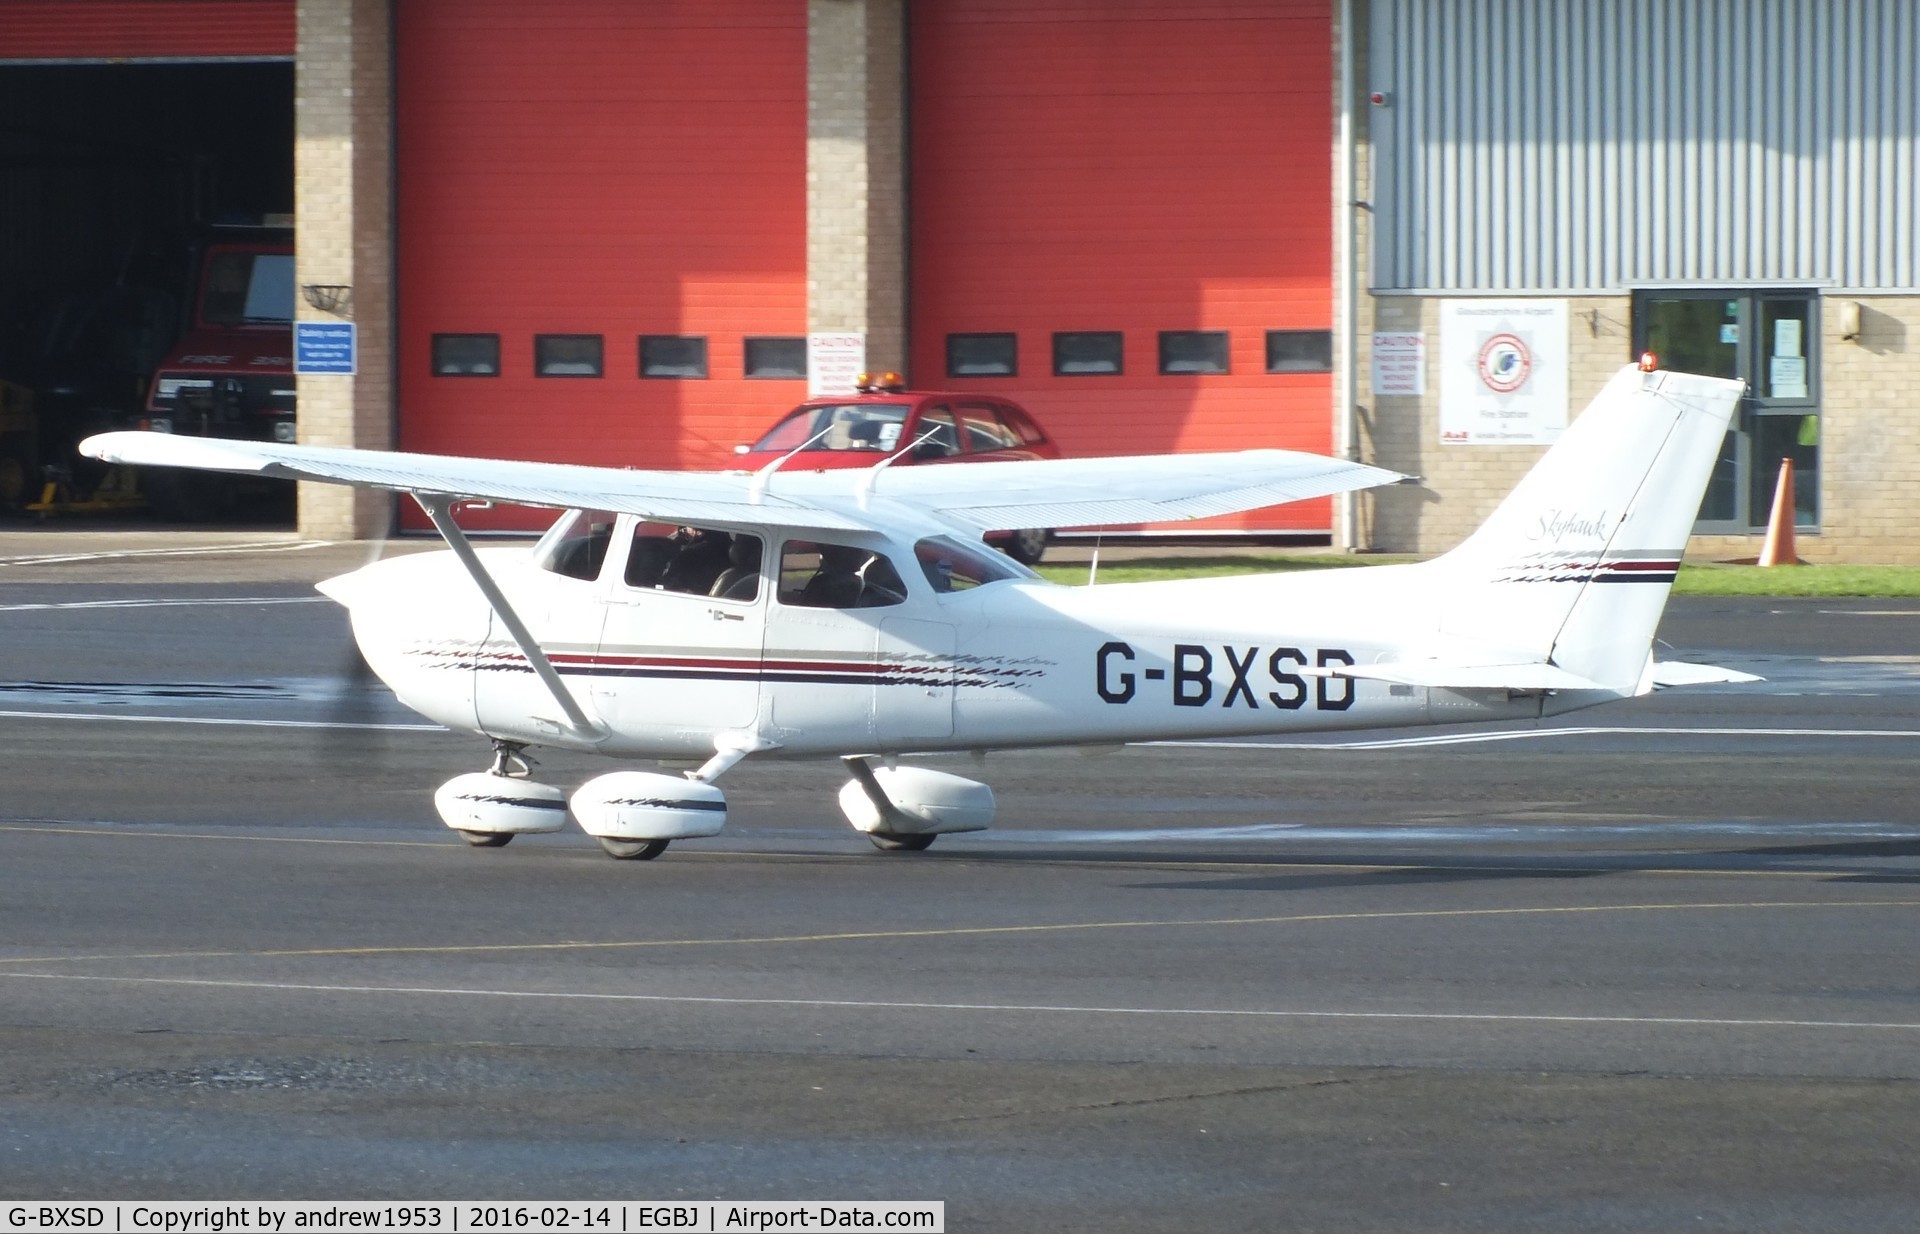 G-BXSD, 1998 Cessna 172R C/N 17280310, G-BXSD at Gloucestershire Airport.